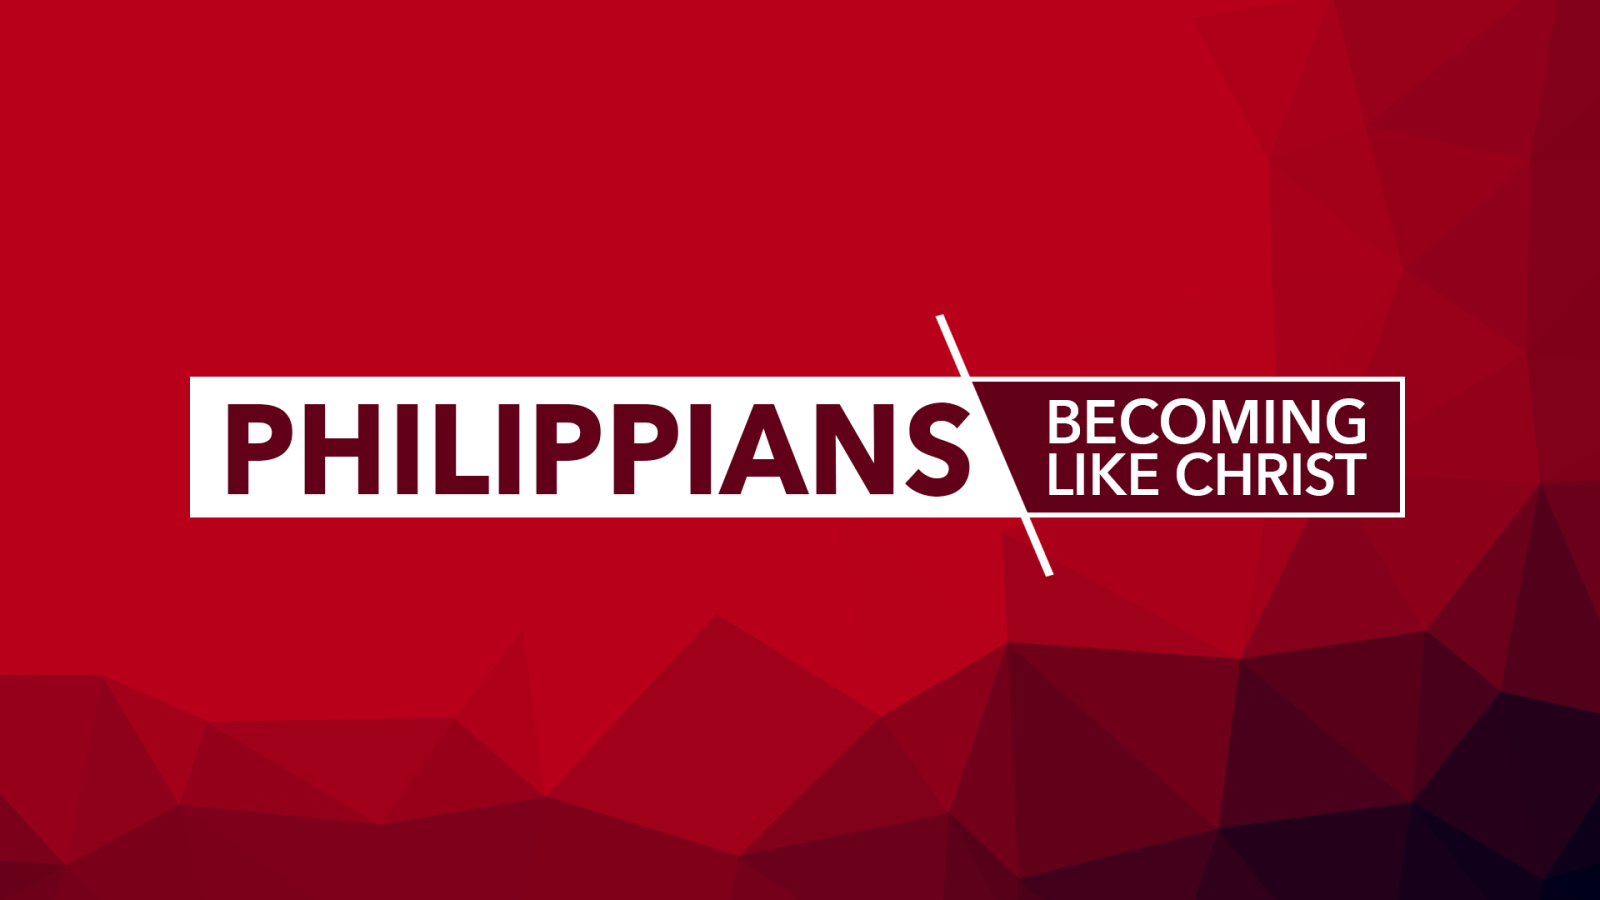 Philippians - Becoming Like Christ